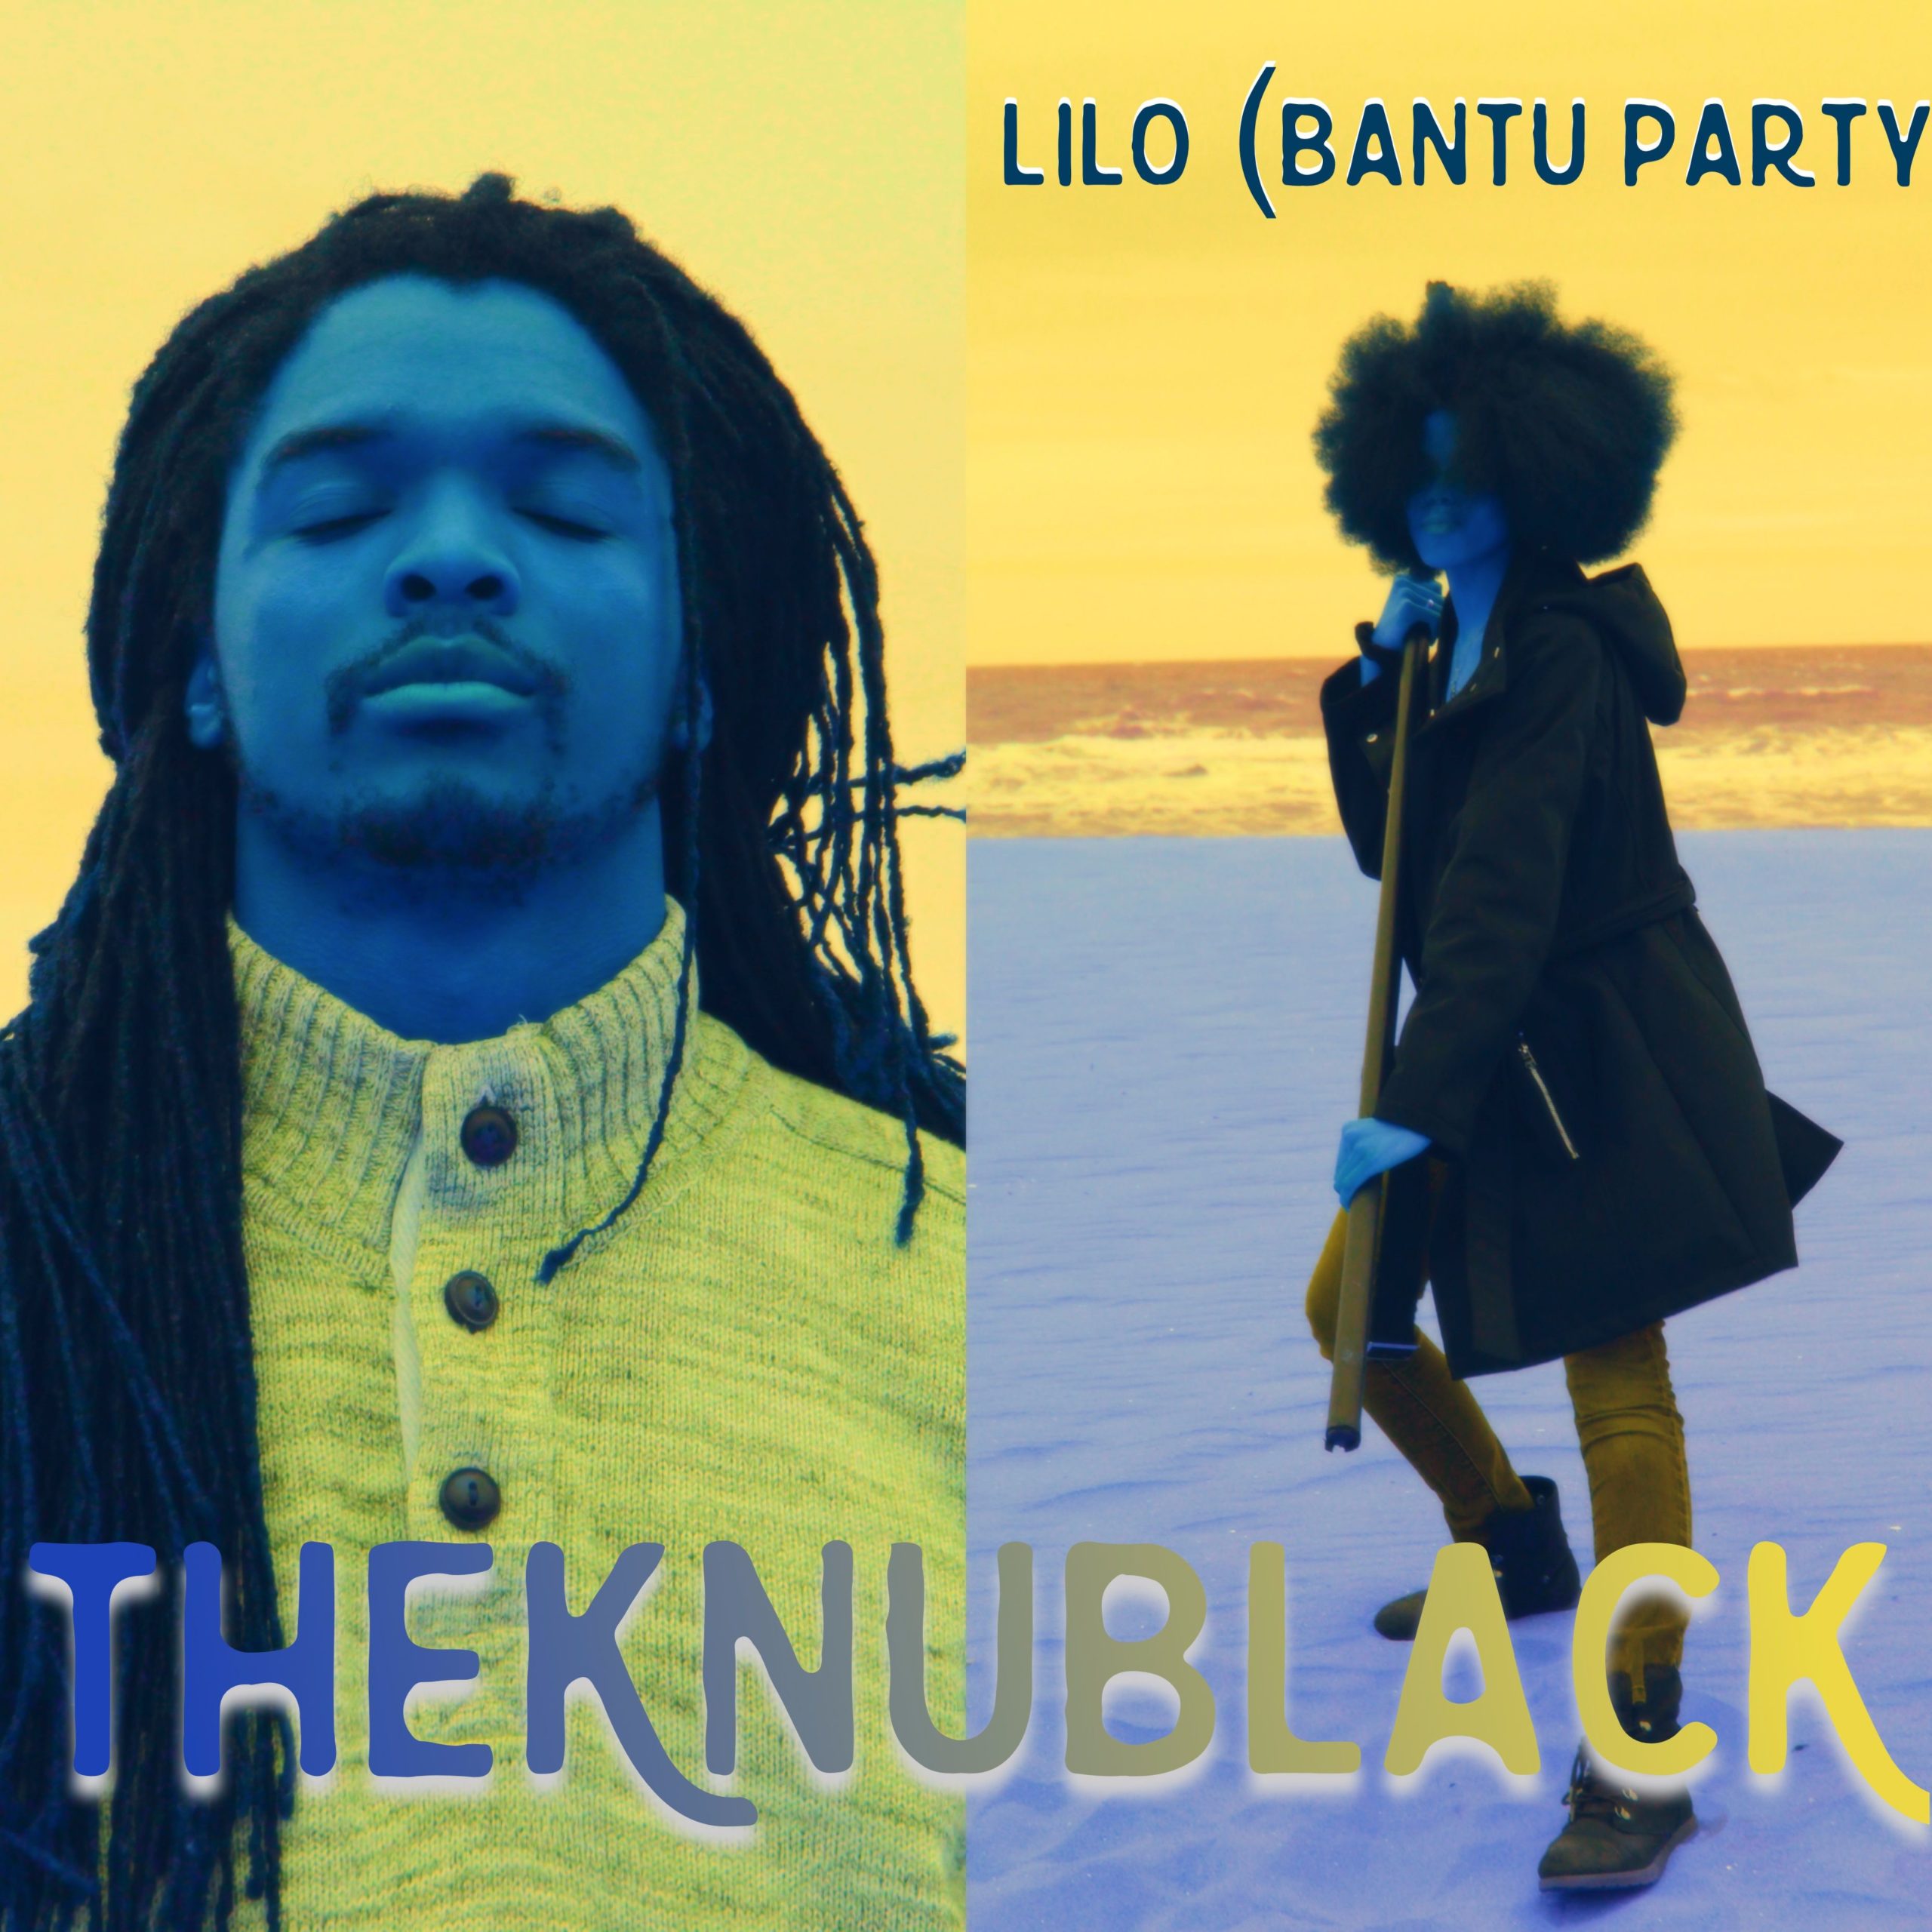 TheKnuBlack – “Lilo (Bantu Party)”